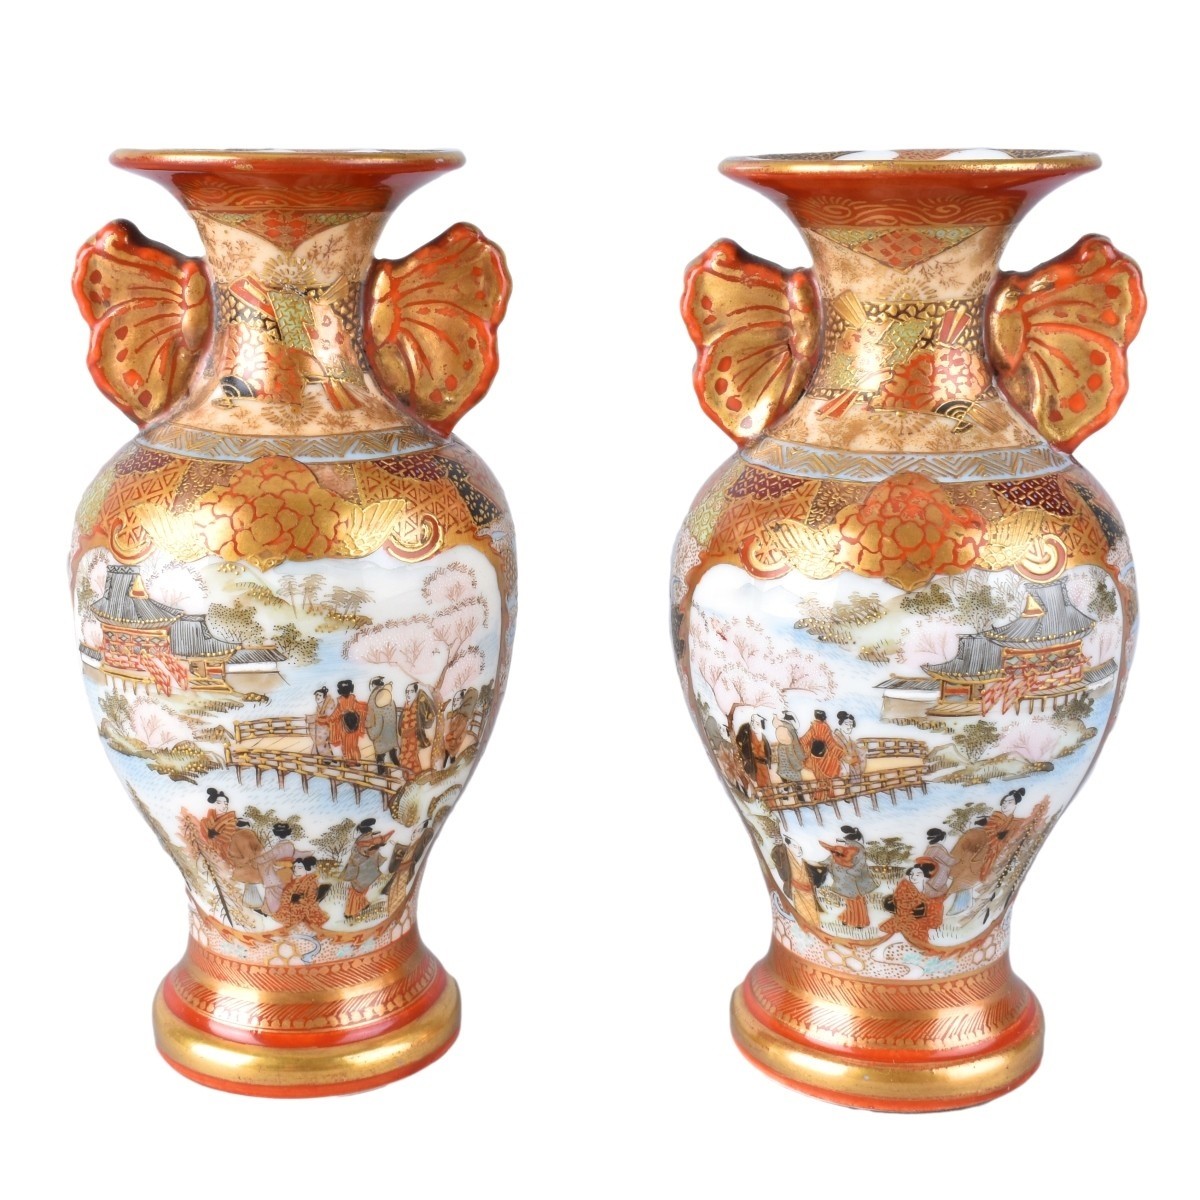 Pair of Japanese Miniature Vases